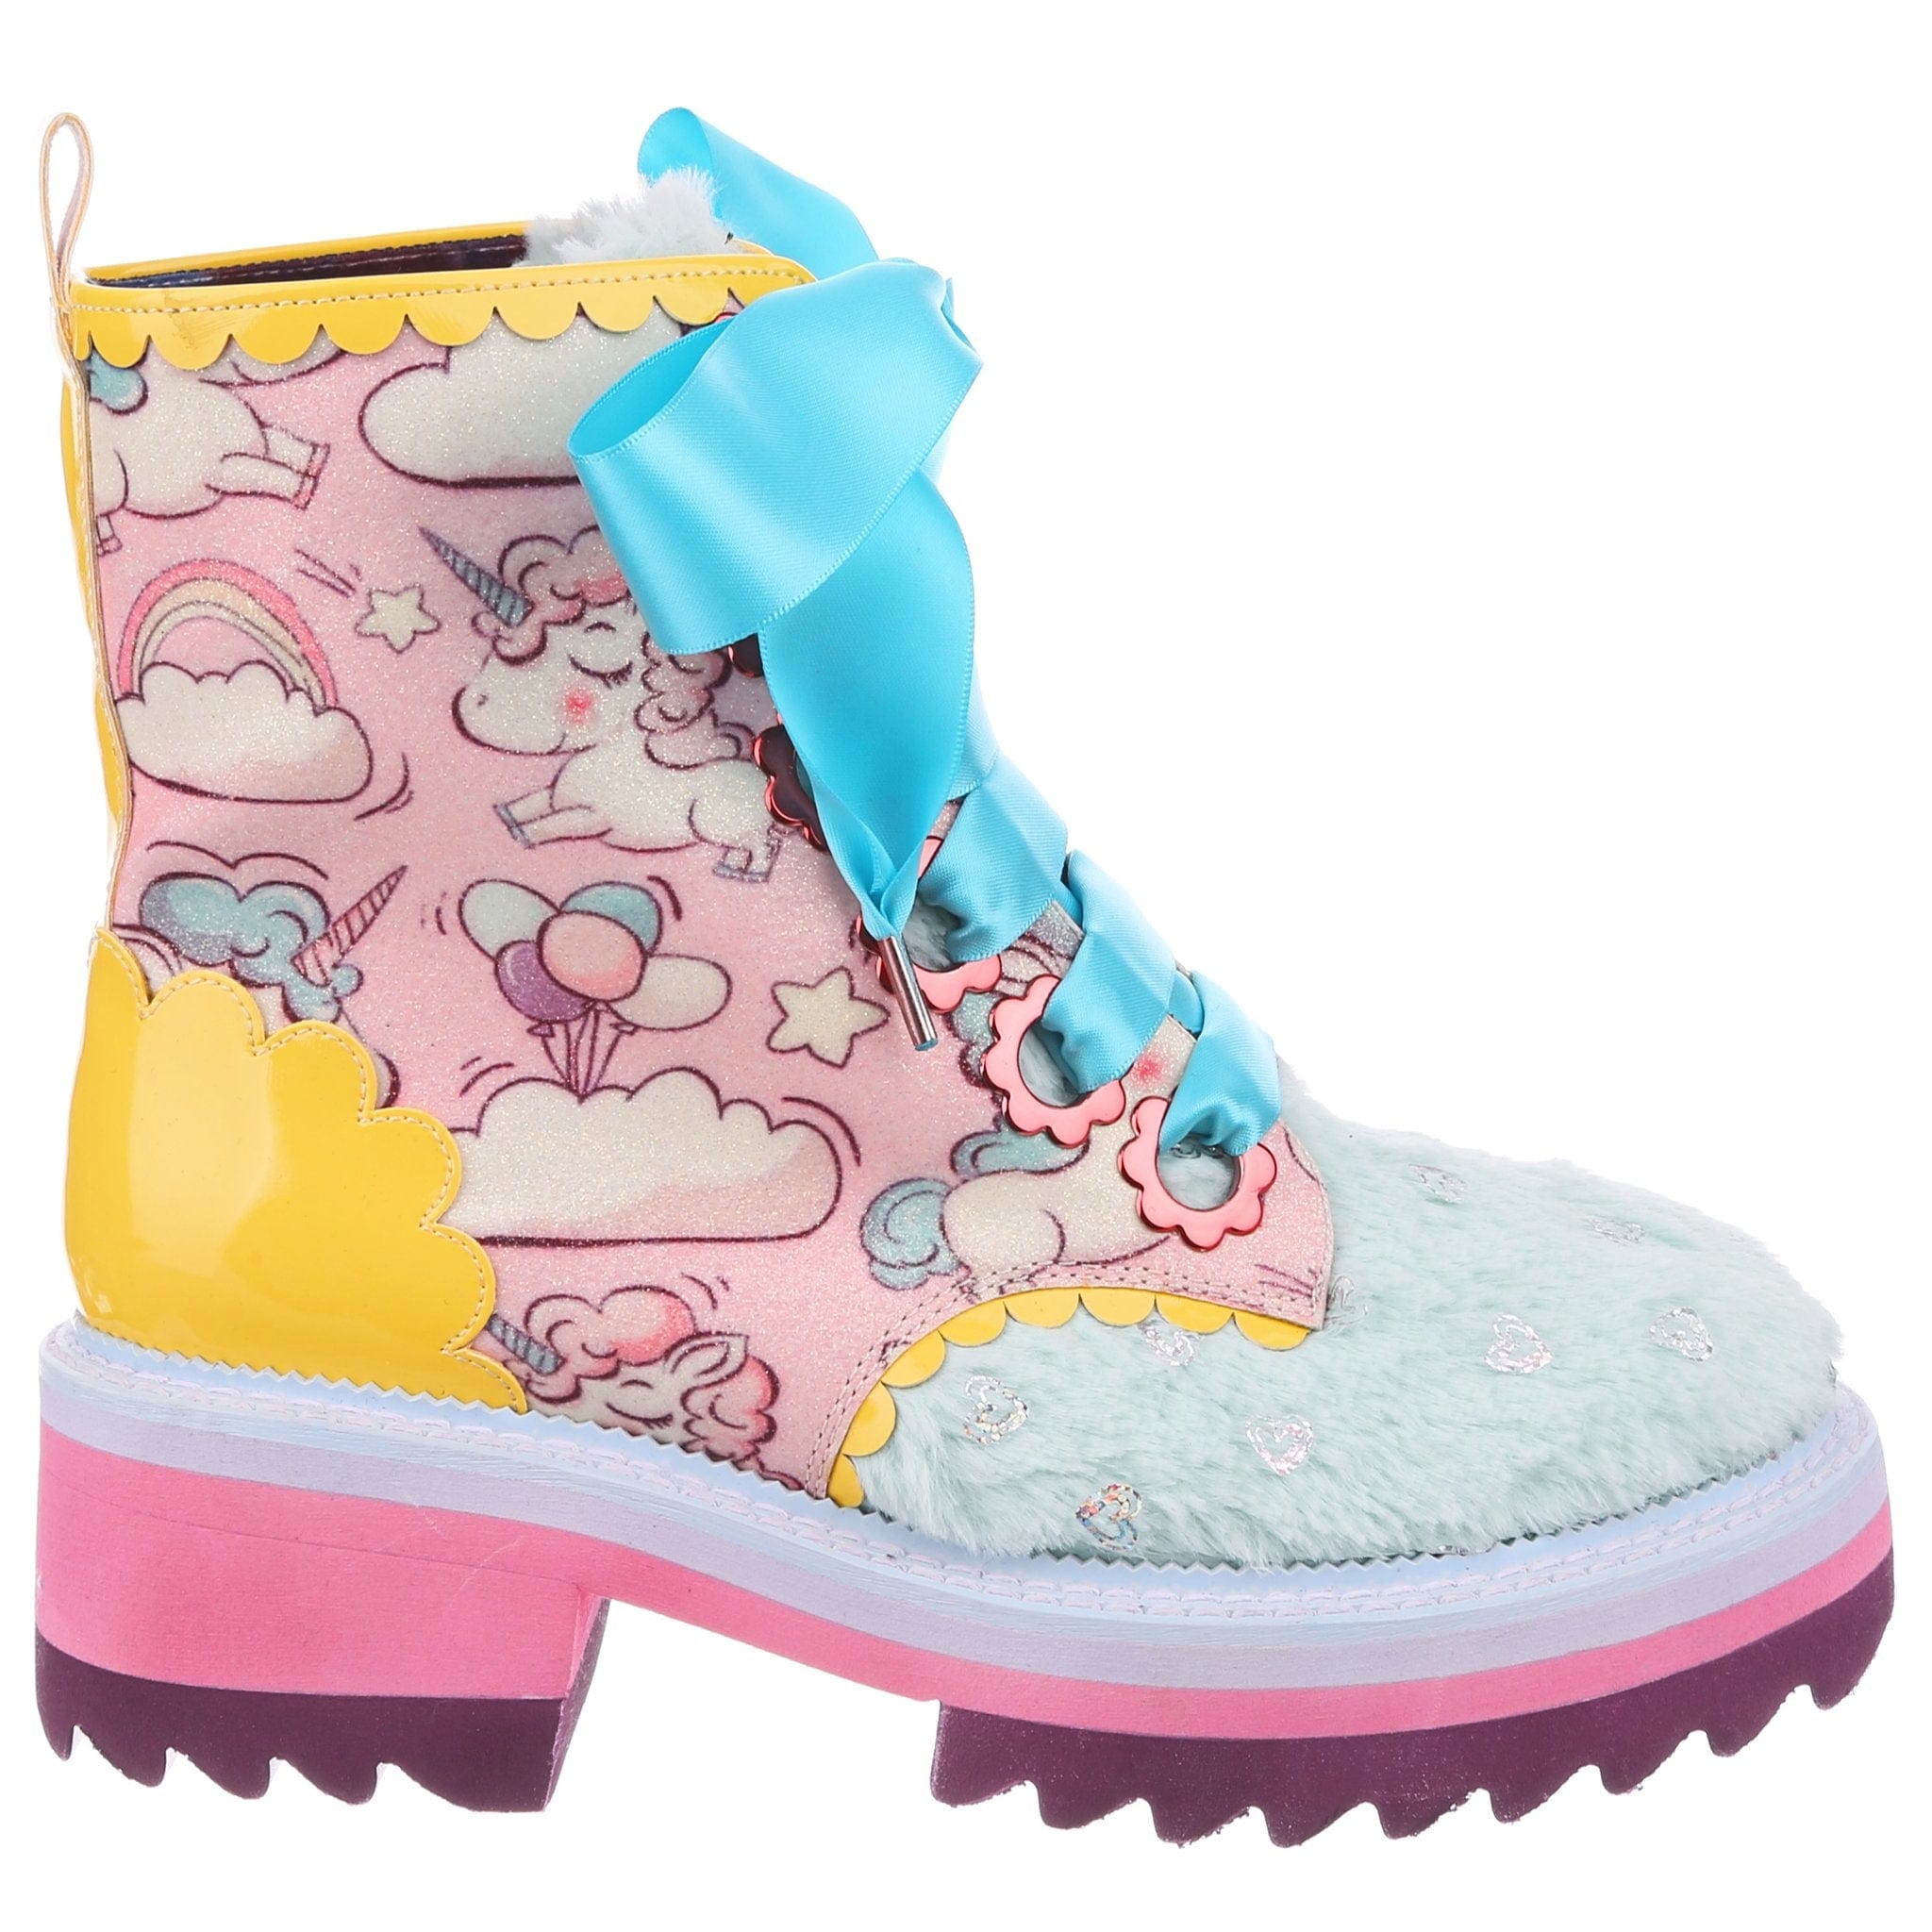 Morning Stroll Boots by Irregular Choice – Kawaii Gifts